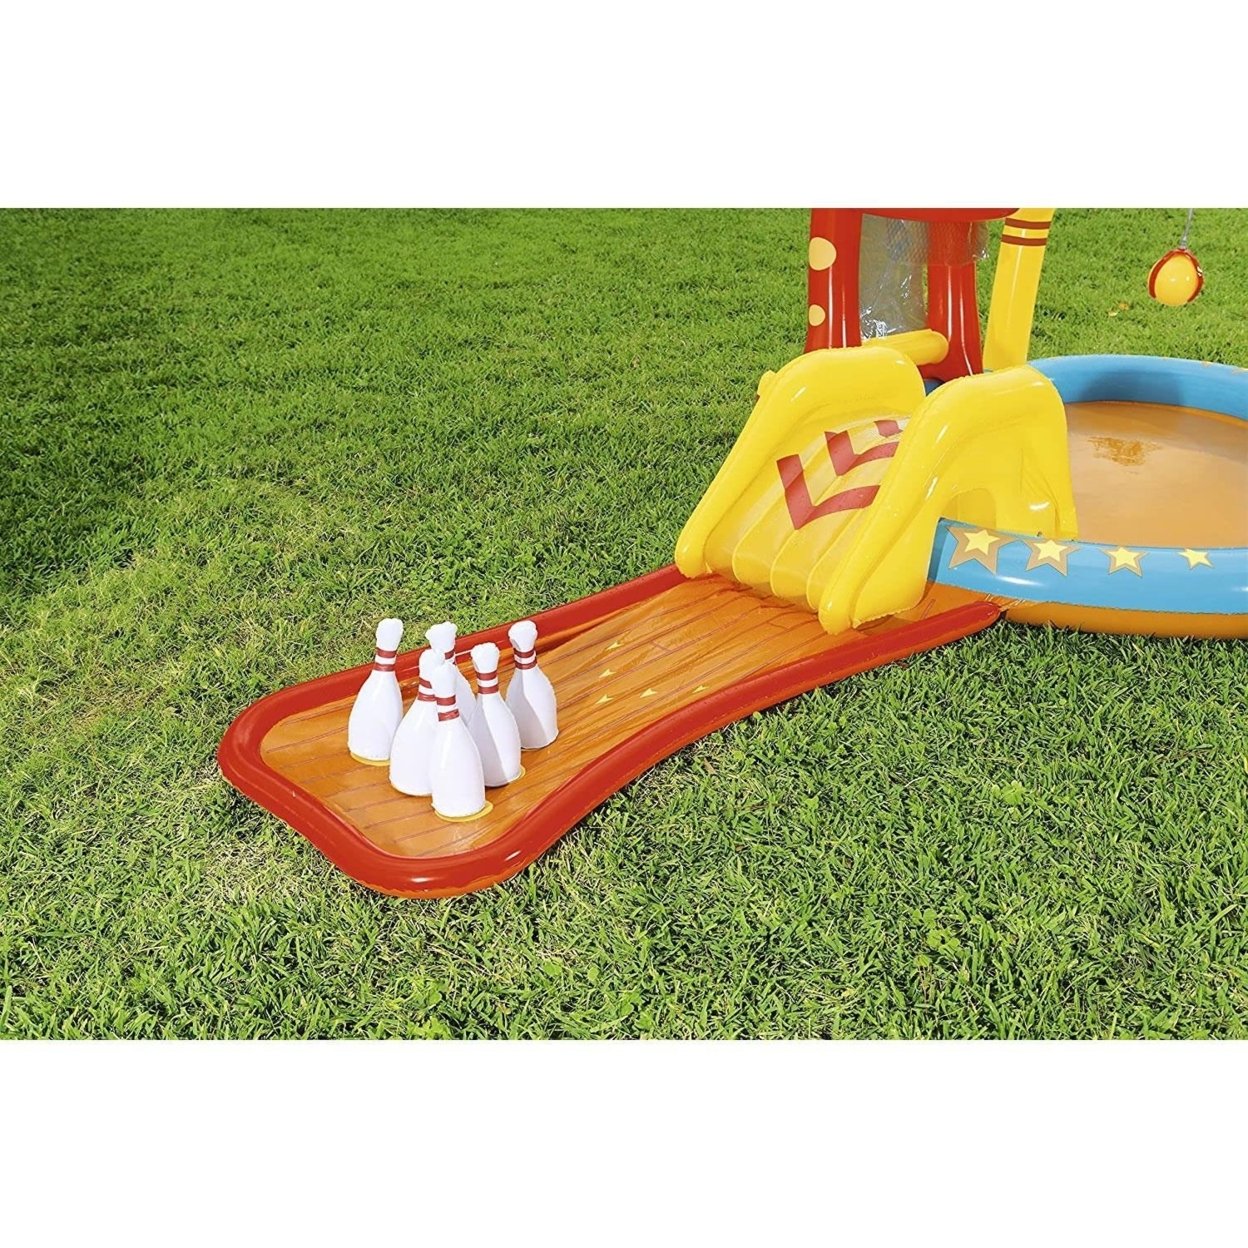 Kids Inflatable 14' Pool Lil Champ Play Center Slide Sprinkler Outdoor Fun Bestway